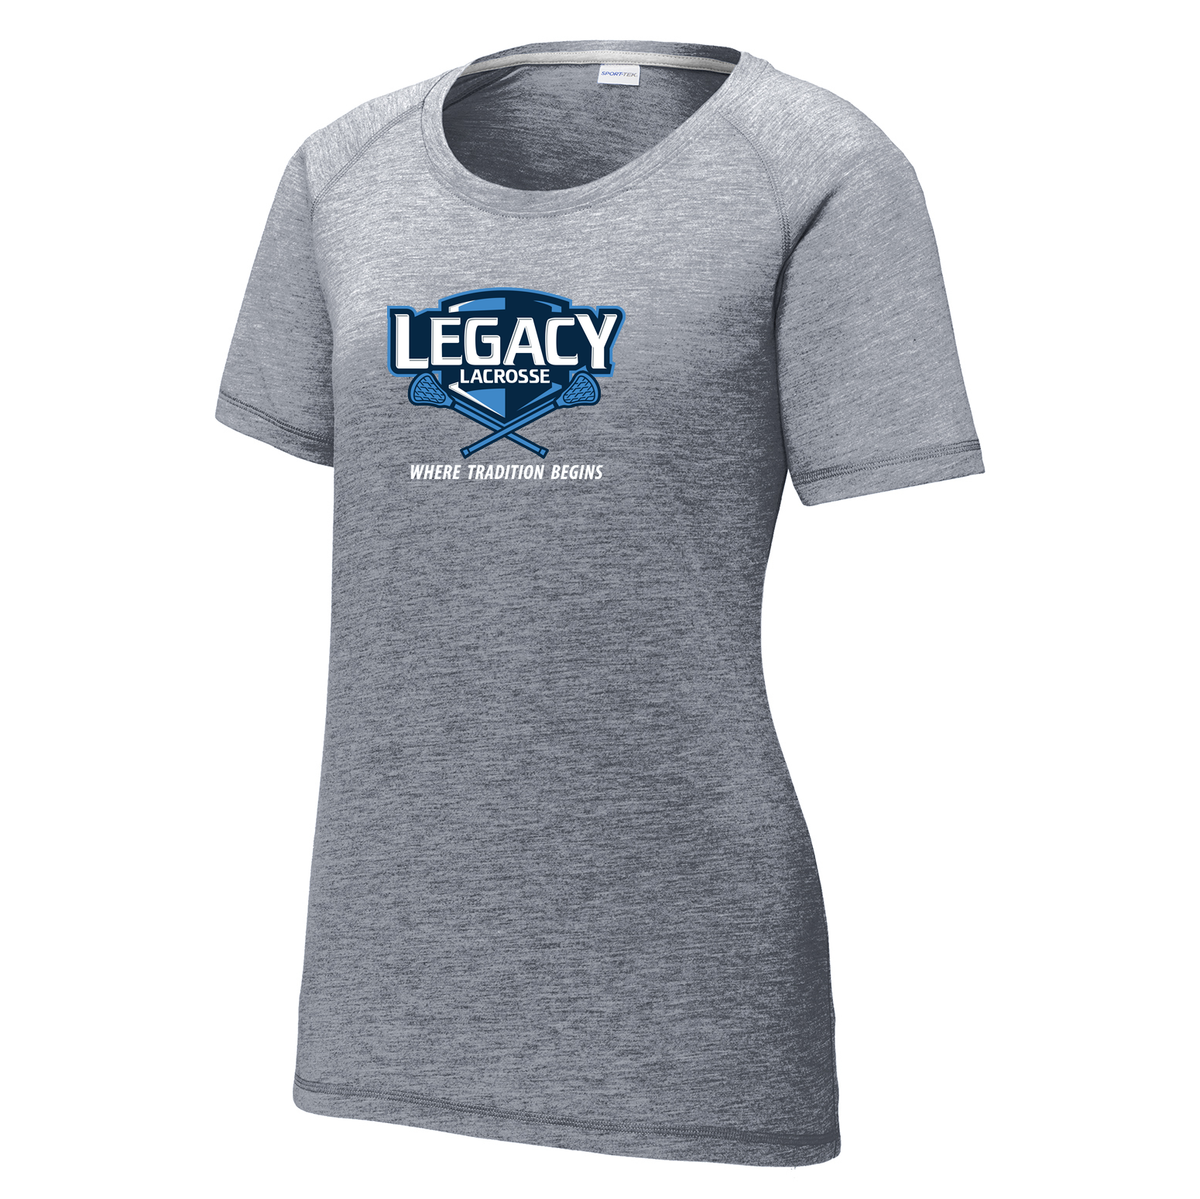 Legacy Lacrosse Womens Raglan CottonTouch